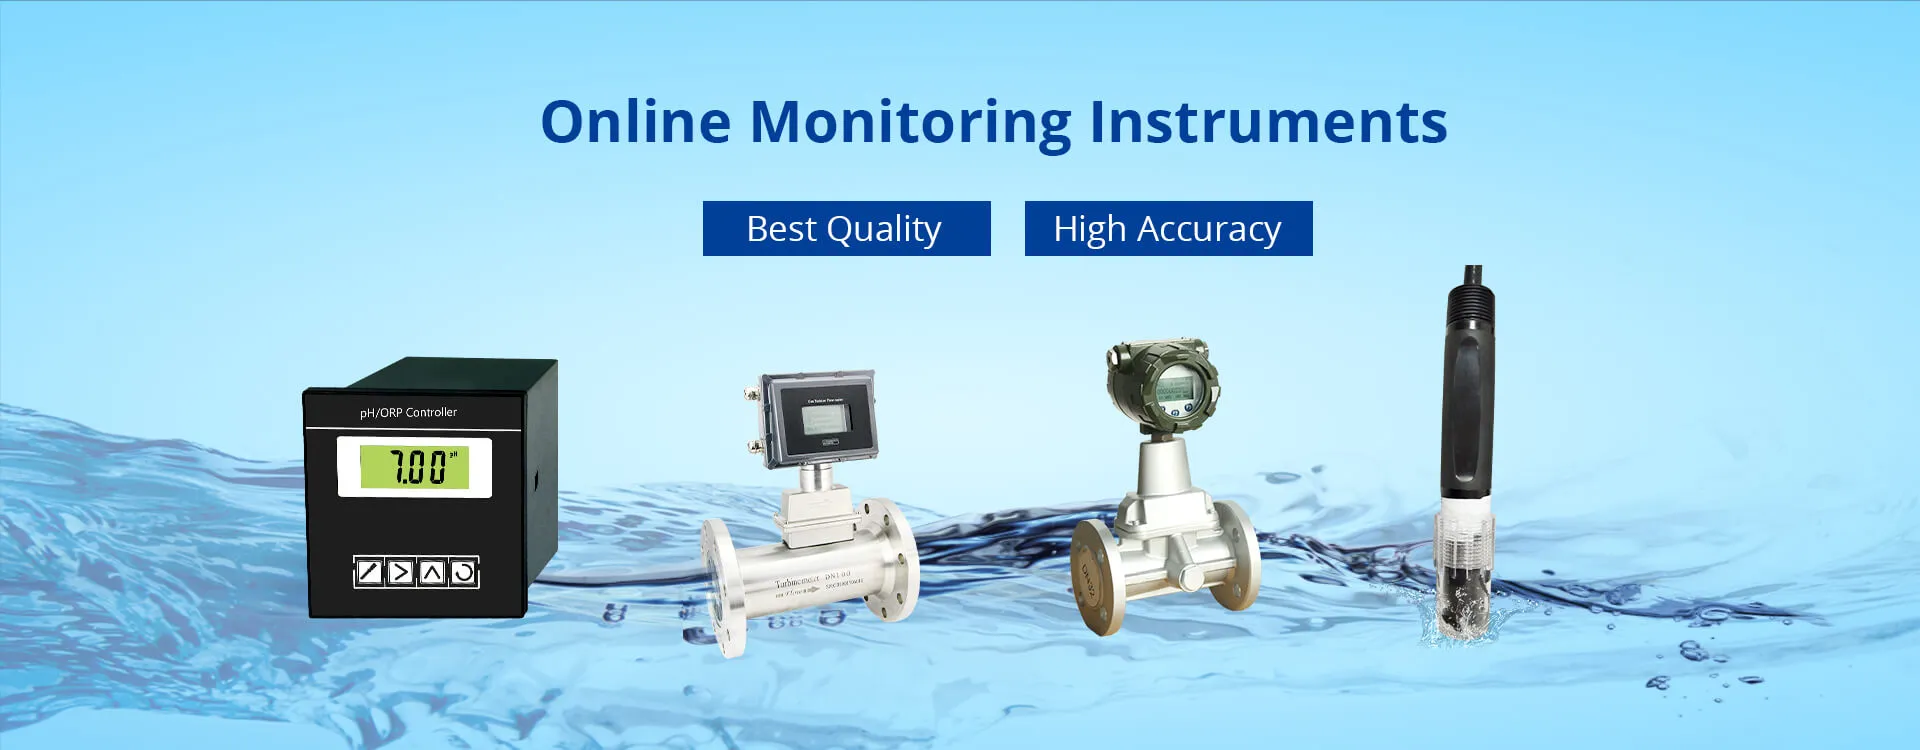 Online Water Monitor Instruments